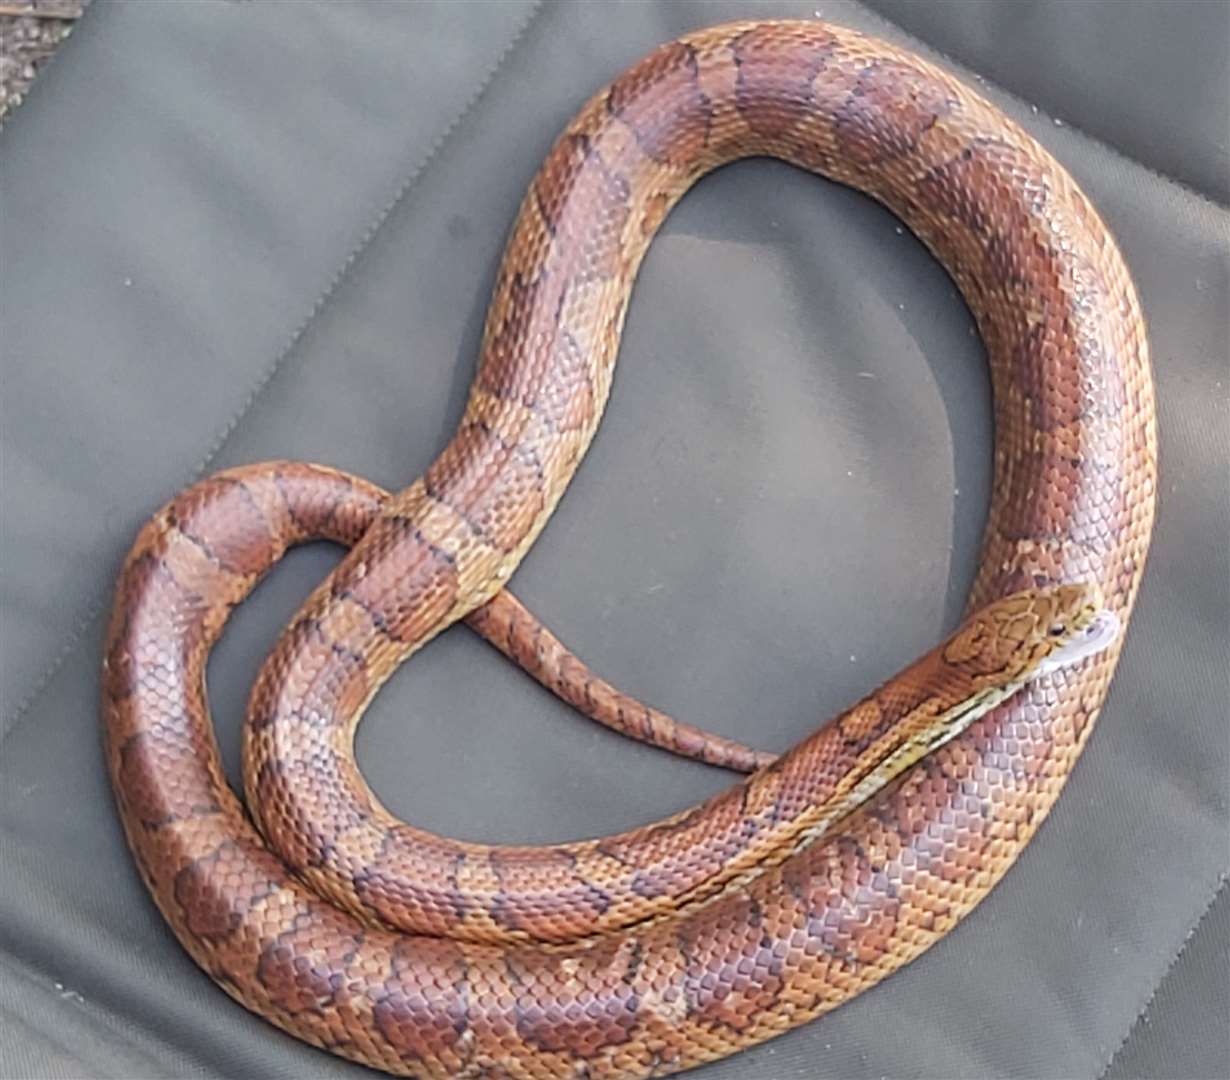 A snake was discovered in Brooklands Lake, Dartford last month